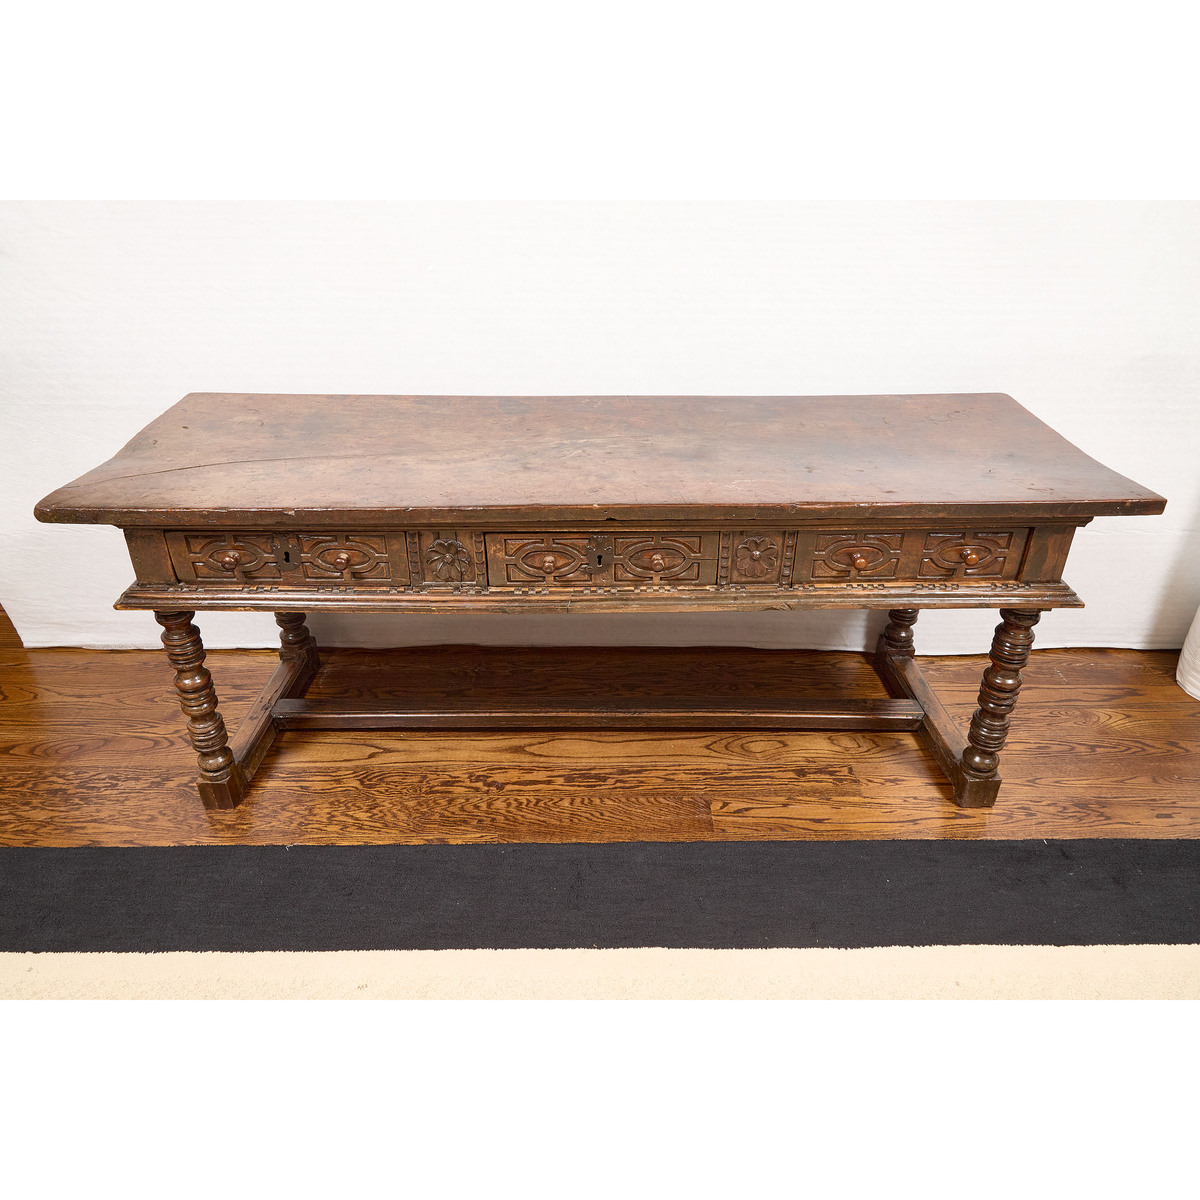 Elizabethan Walnut Refectory Table, c.1600, 34.75 x 91.5 x 30.75 in — 88.3 x 232.4 x 78.1 cm - Image 2 of 3